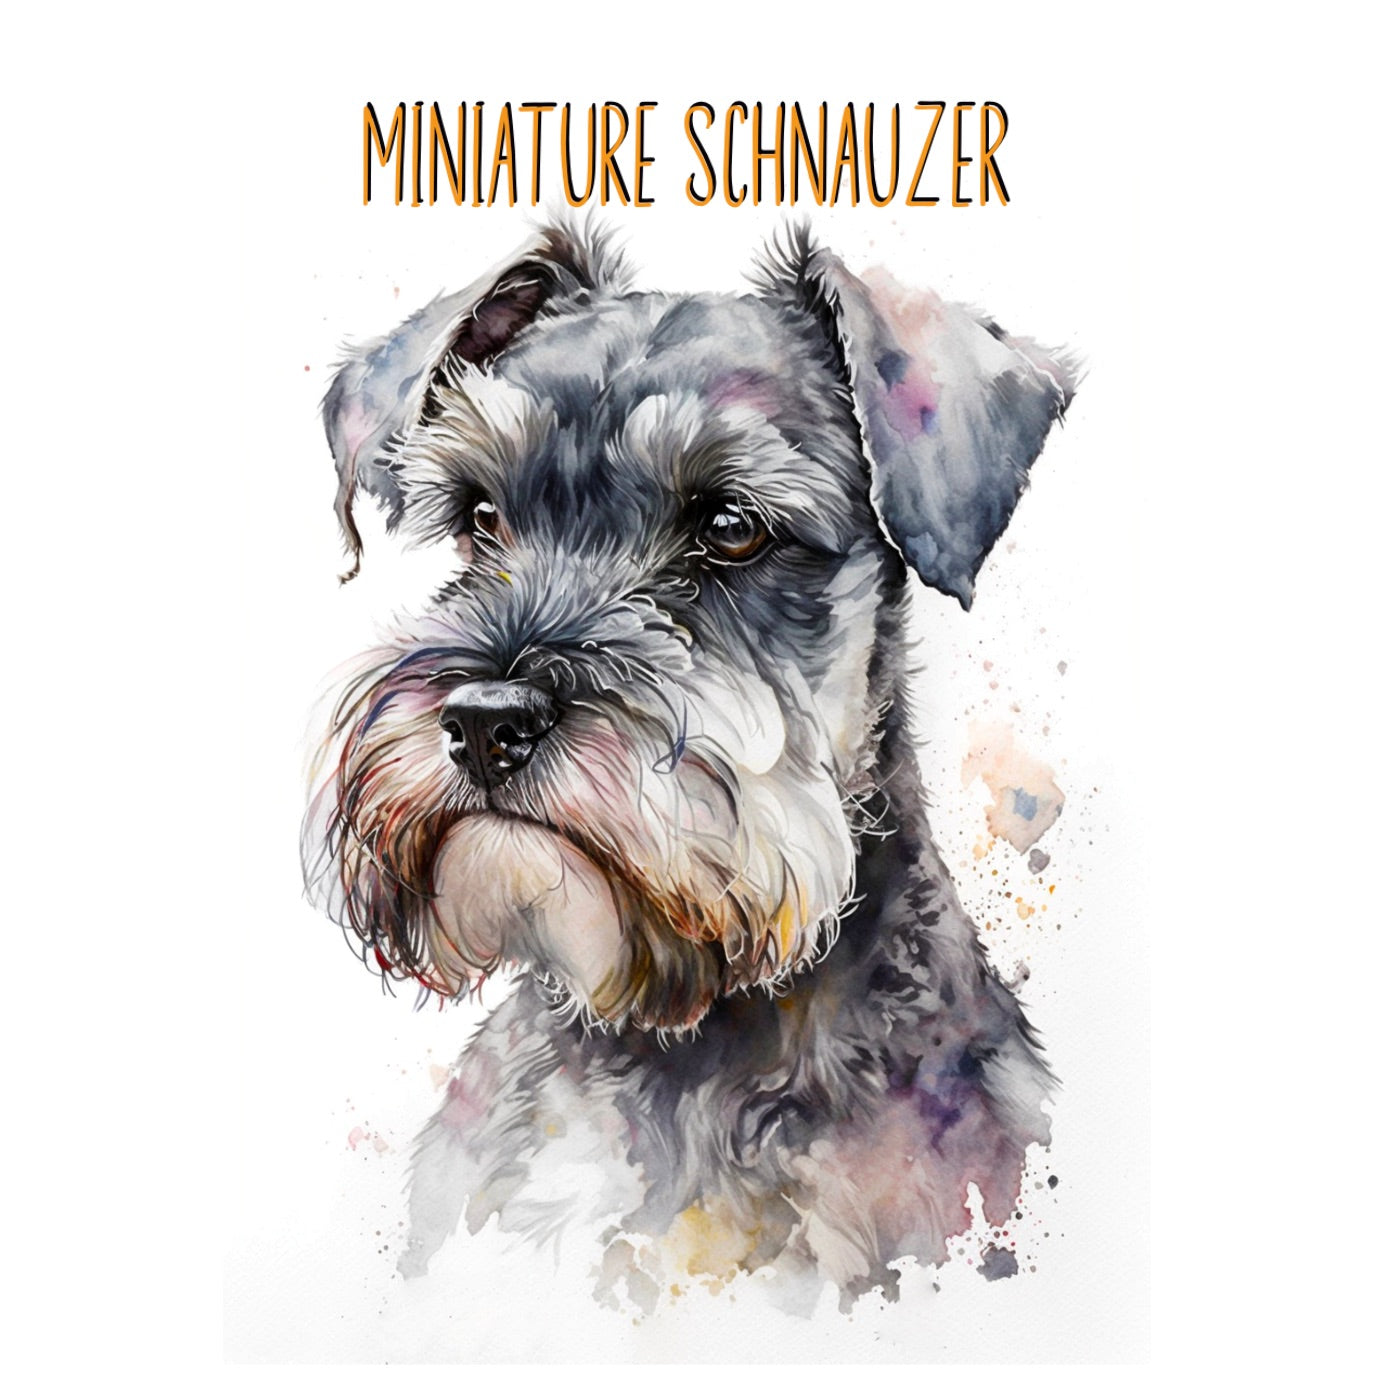 Miniature Schnauzer Dogs Collection Art Square Personalised Coaster Gift Idea